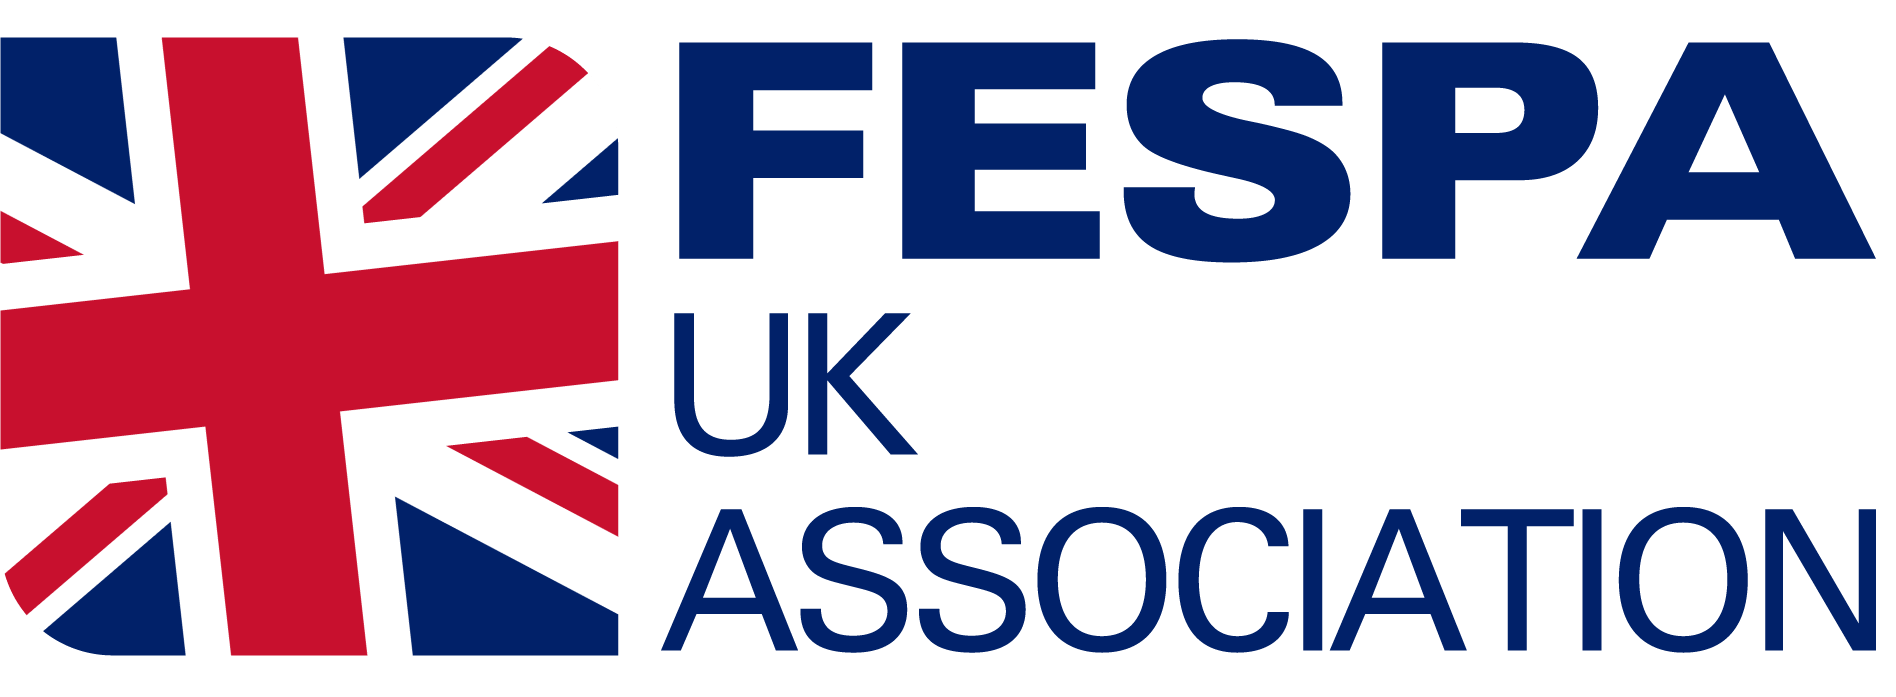 FESPA UK Association logo